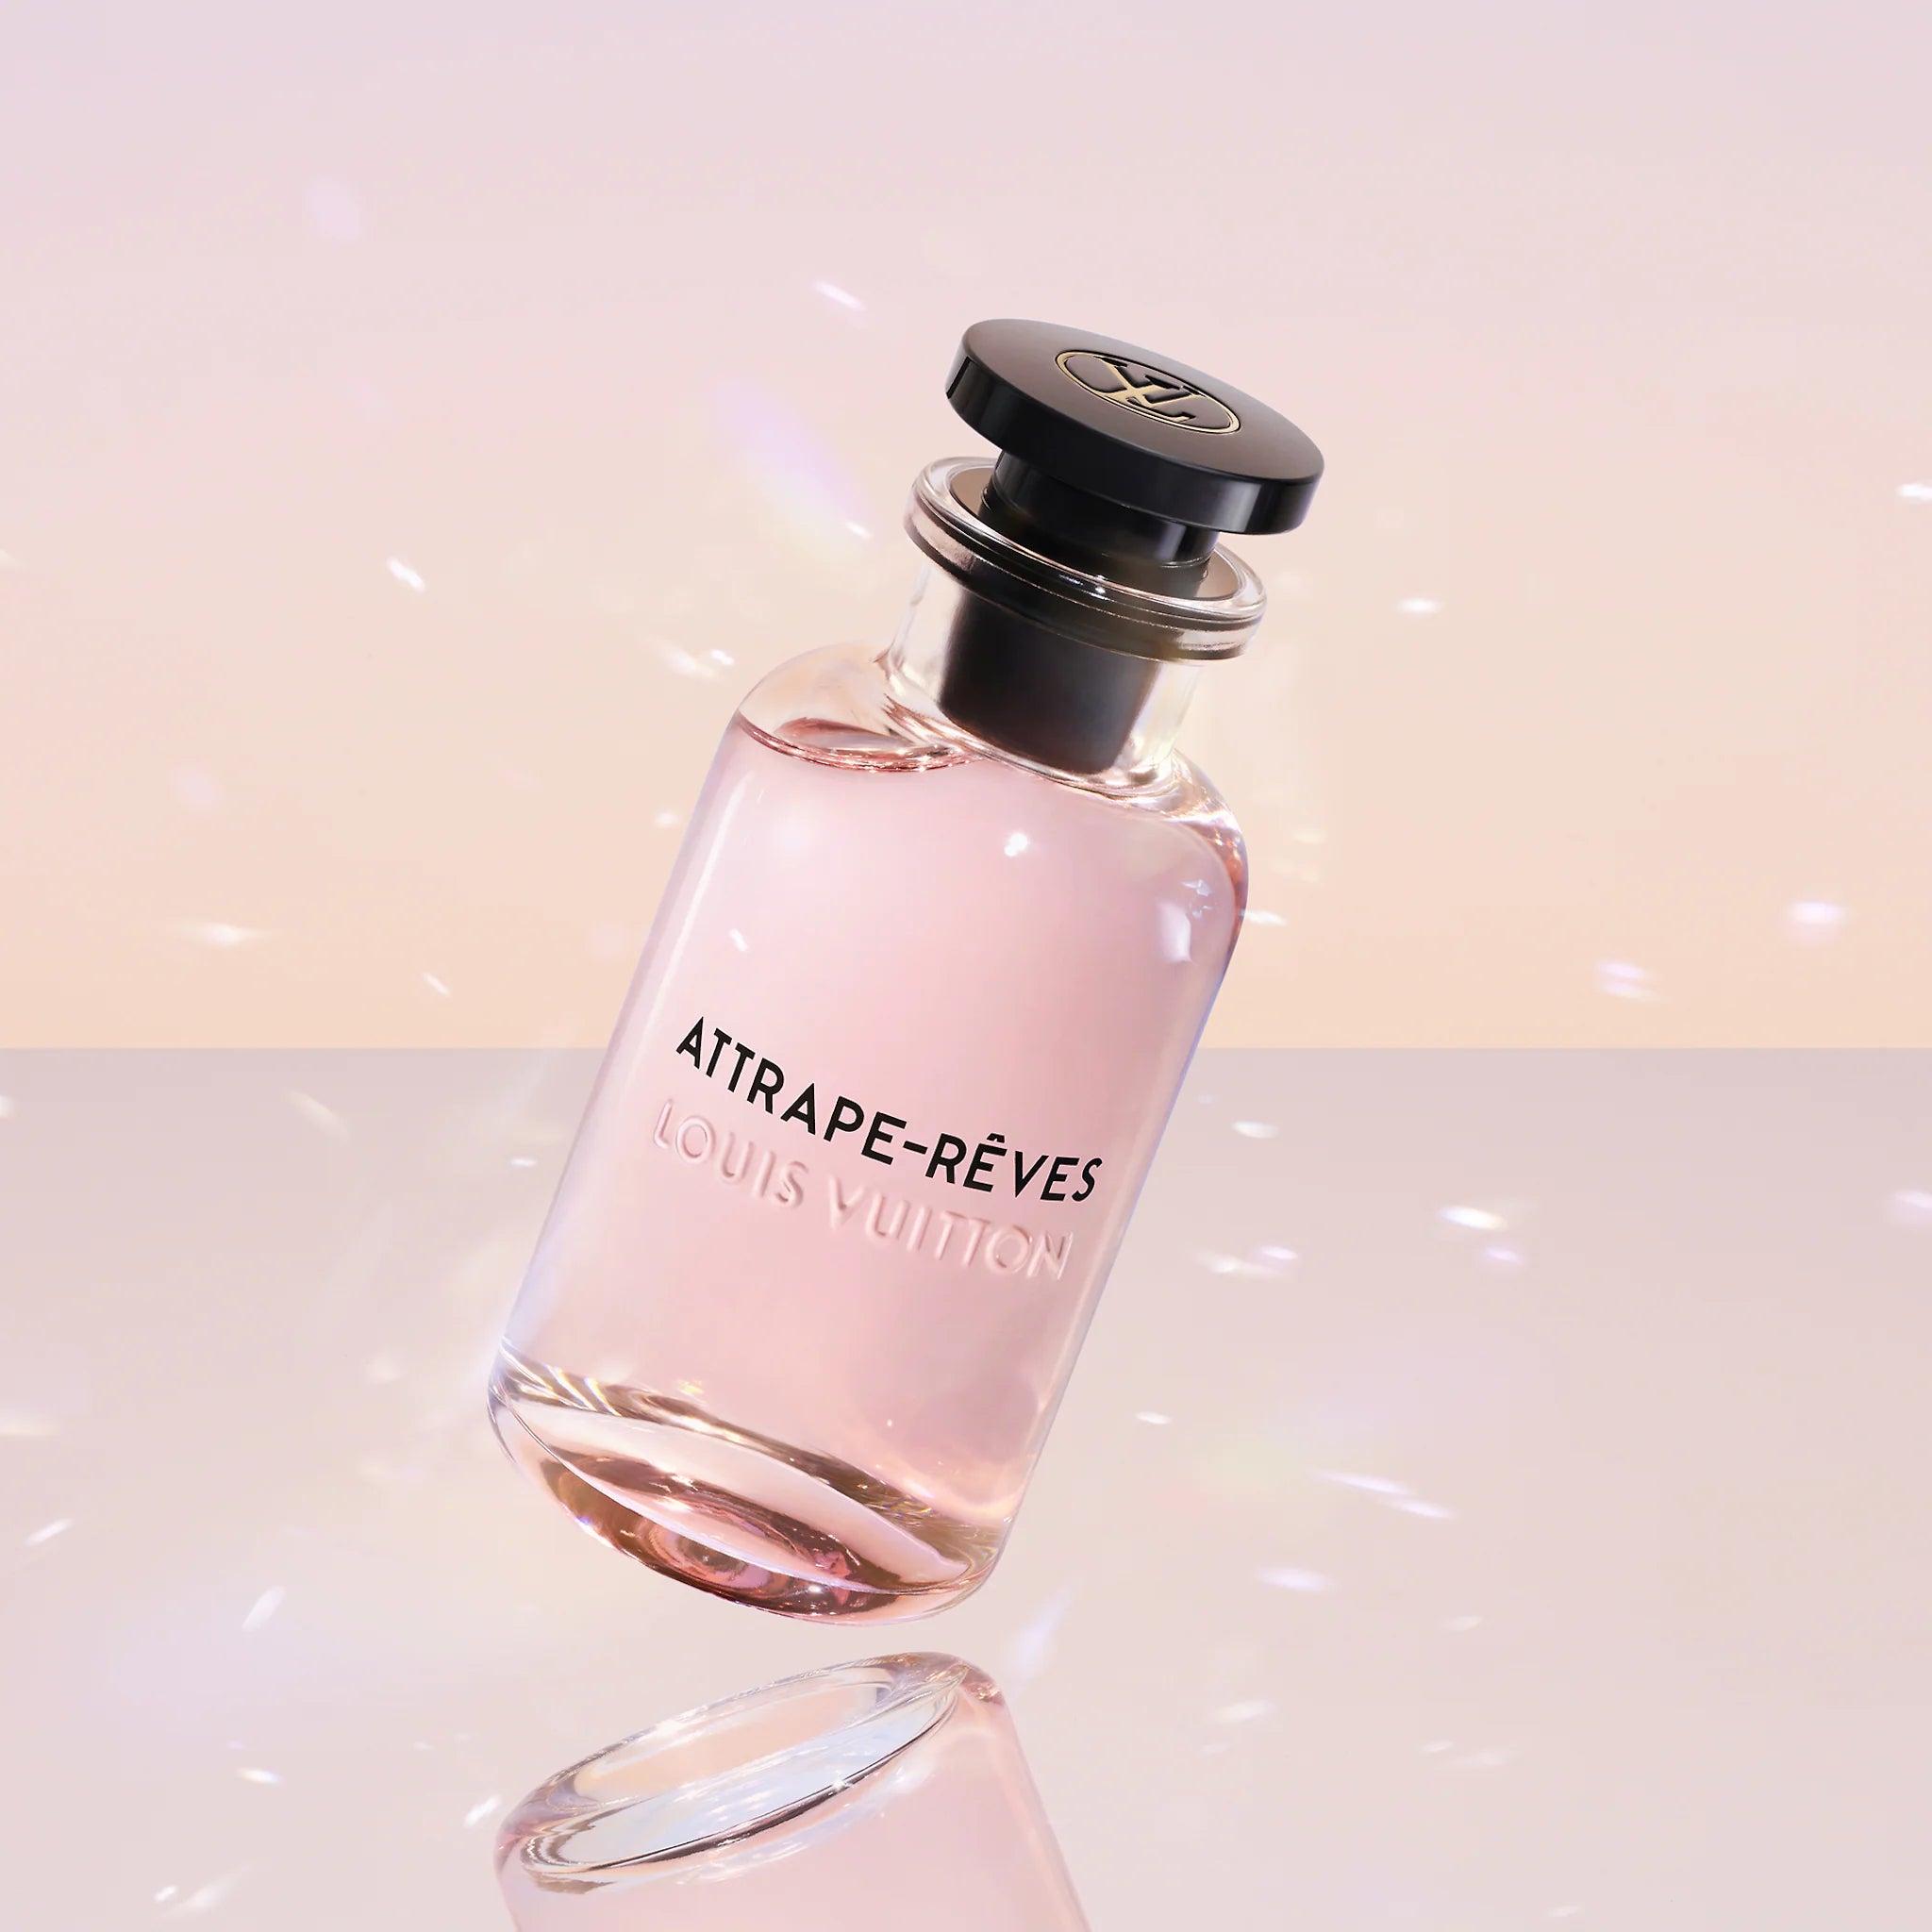 ATTRAPE-RÊVES Louis Vuitton Perfume - Fragrances, Facebook Marketplace